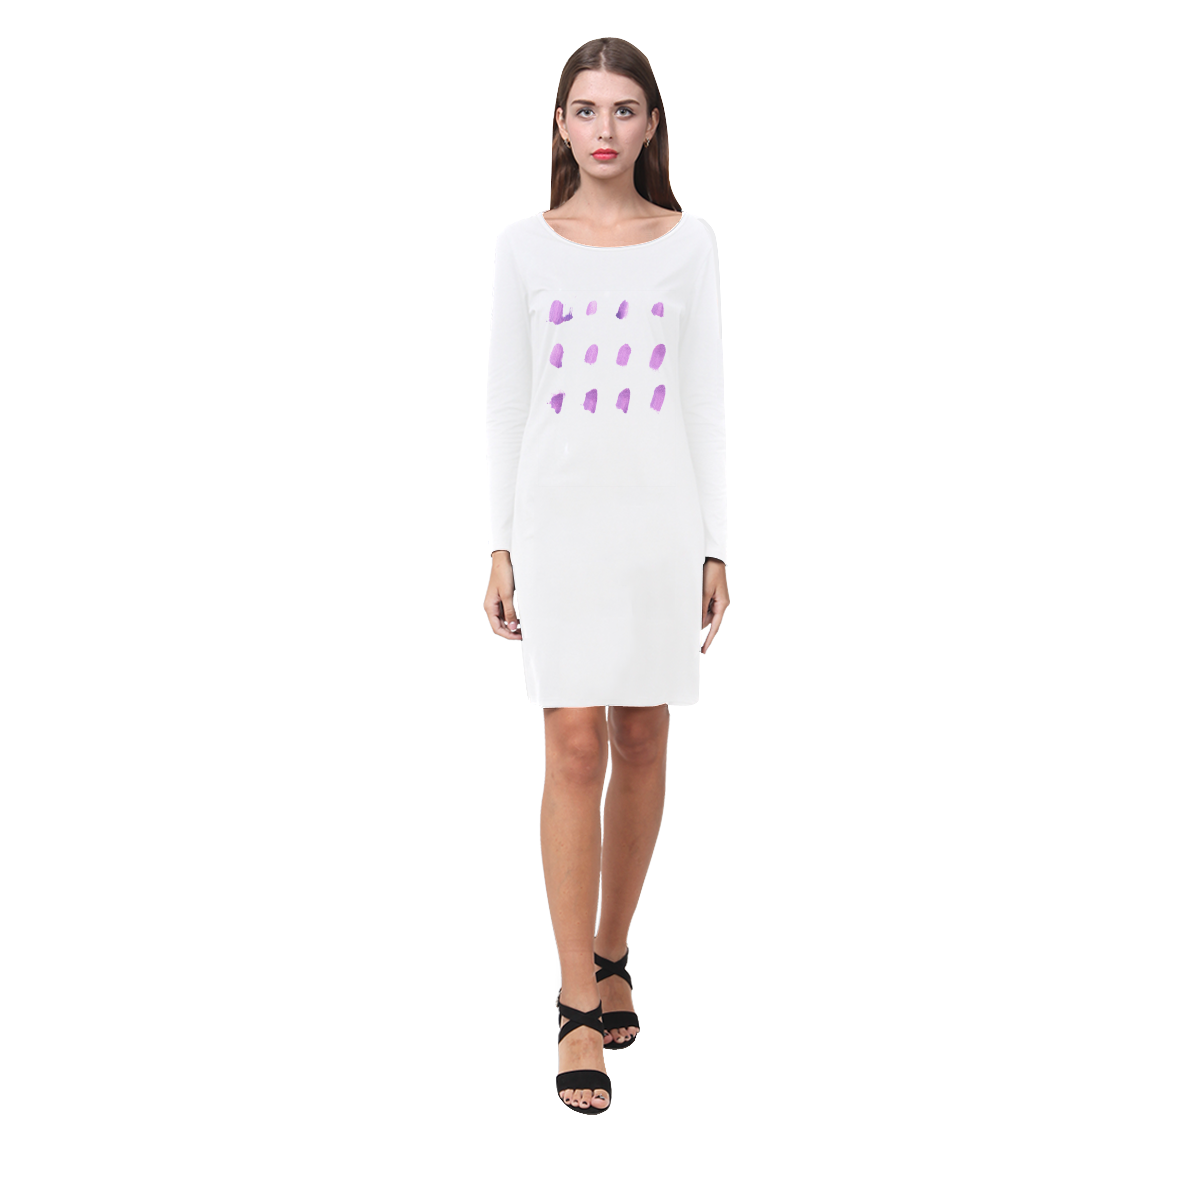 Sleeping ladies dress : white and purple with Lips prints Demeter Long Sleeve Nightdress (Model D03)